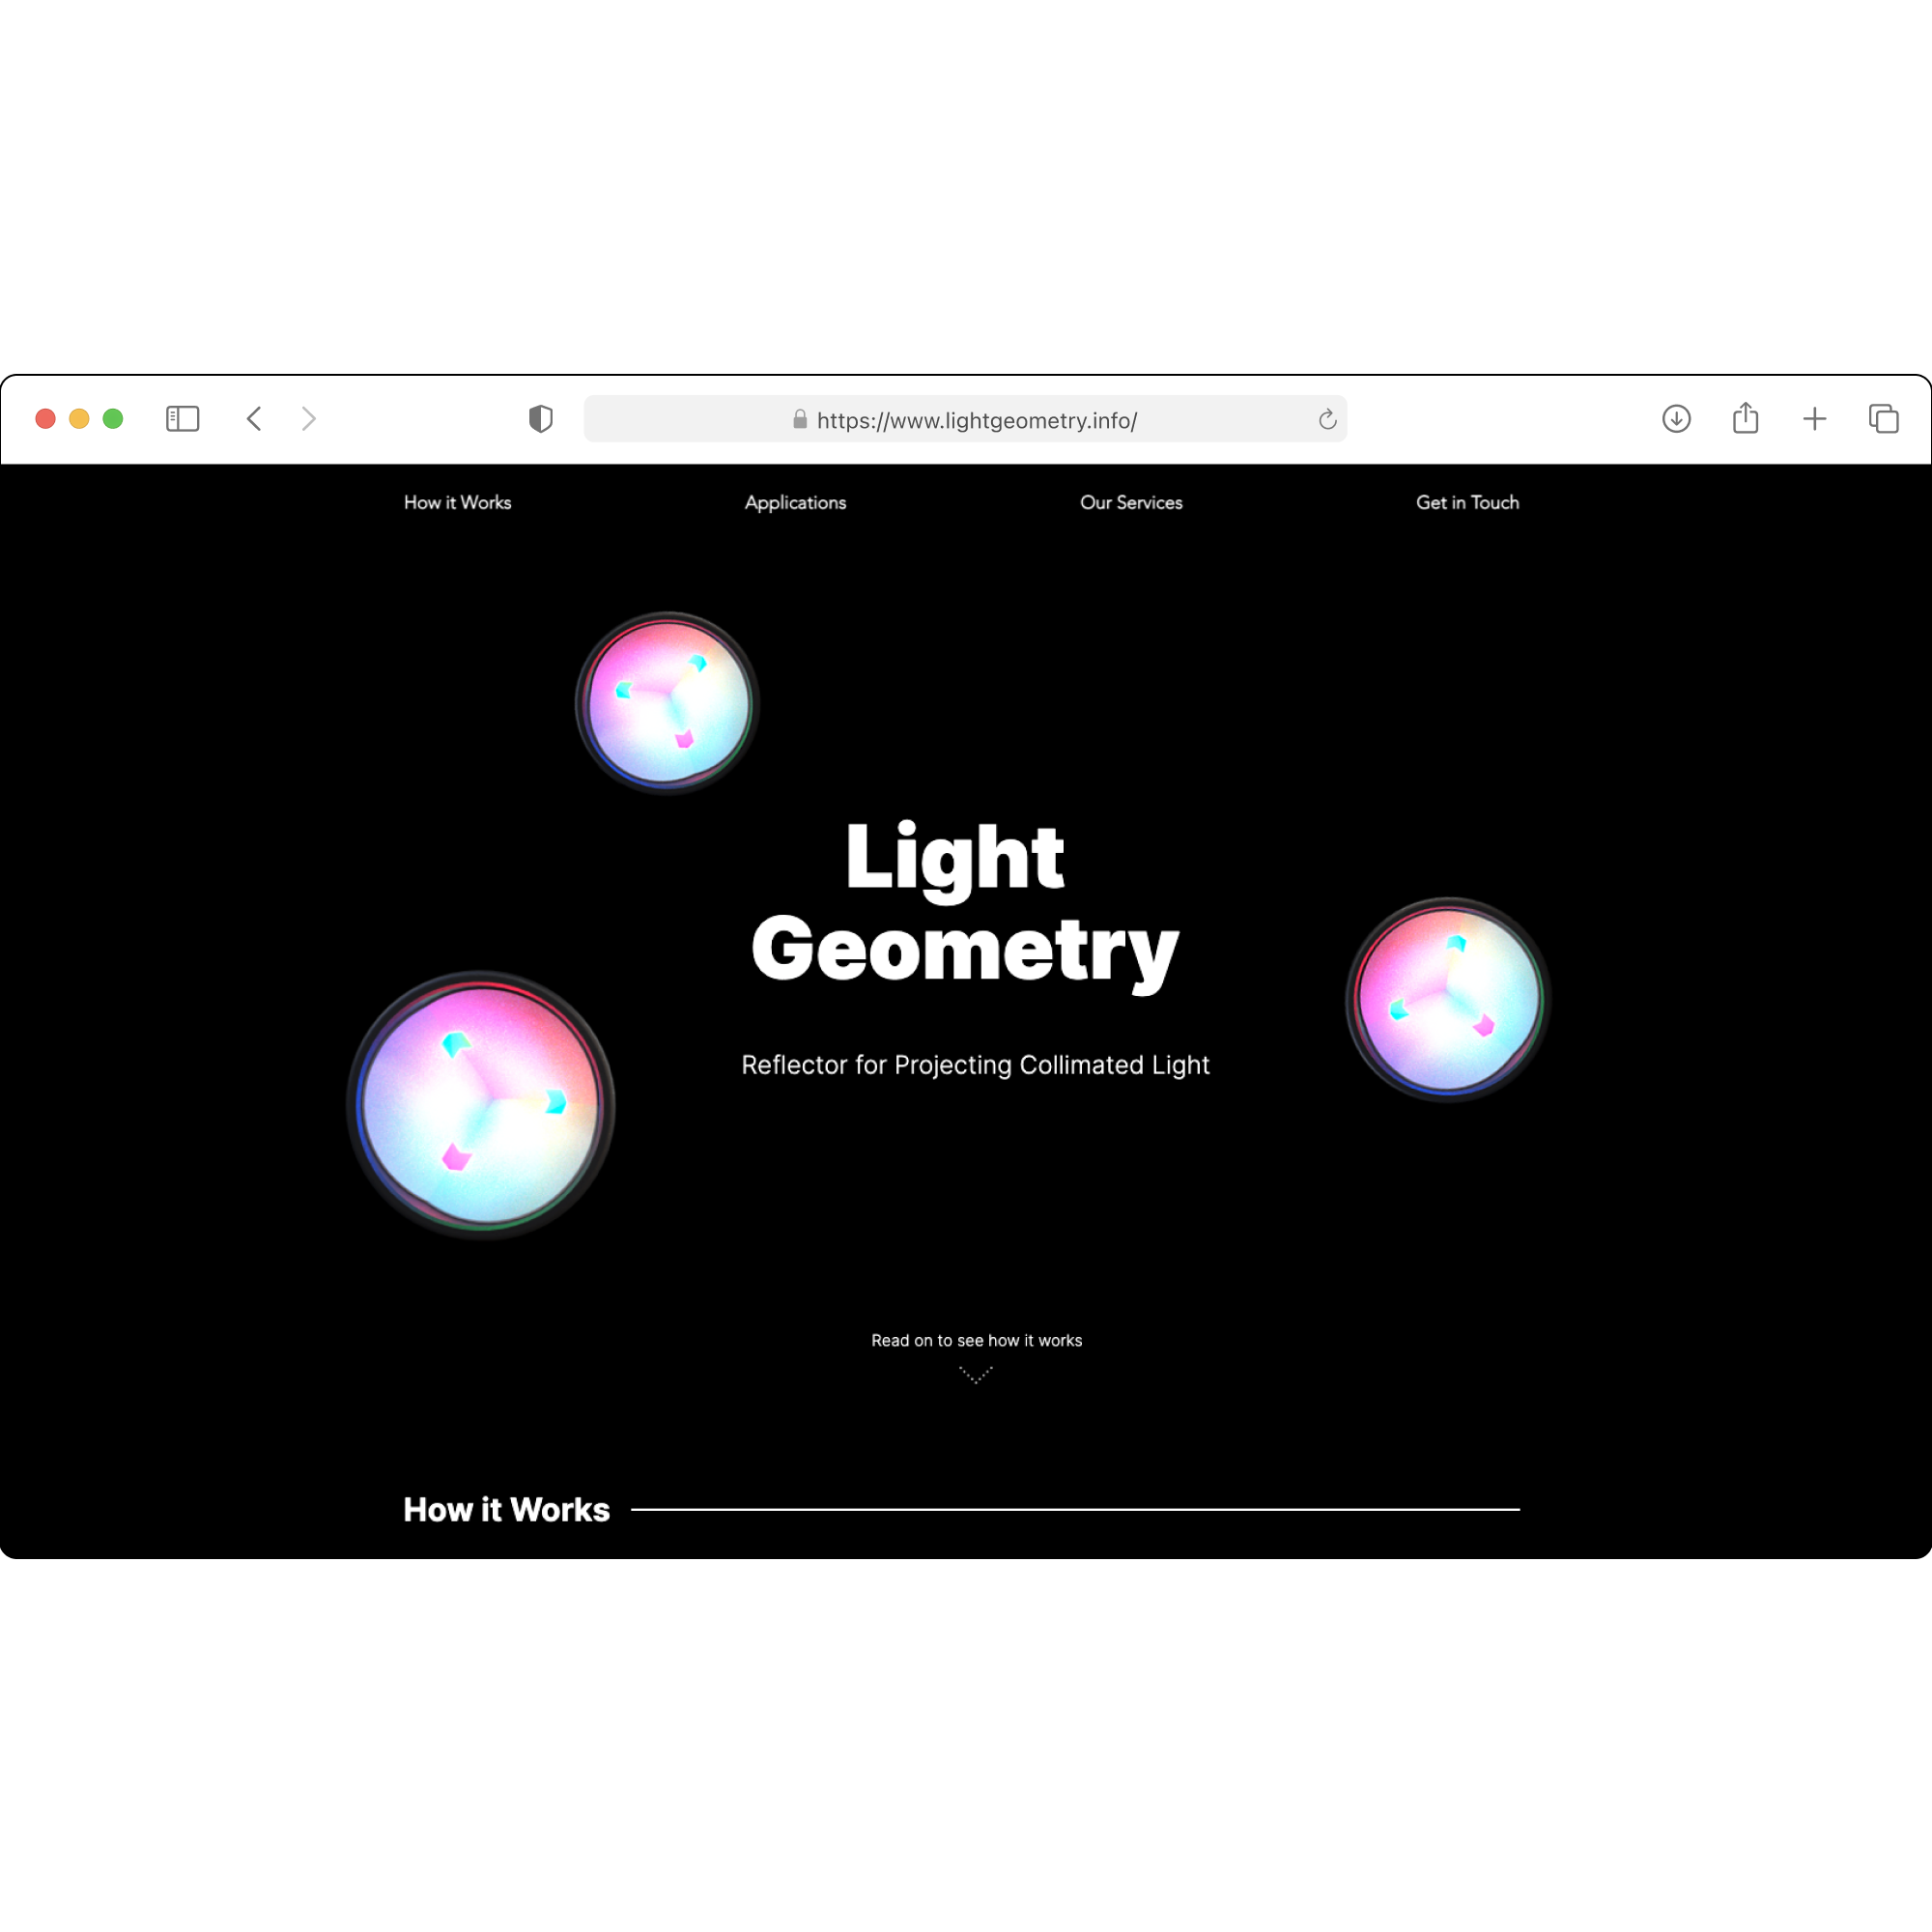 Light geometry